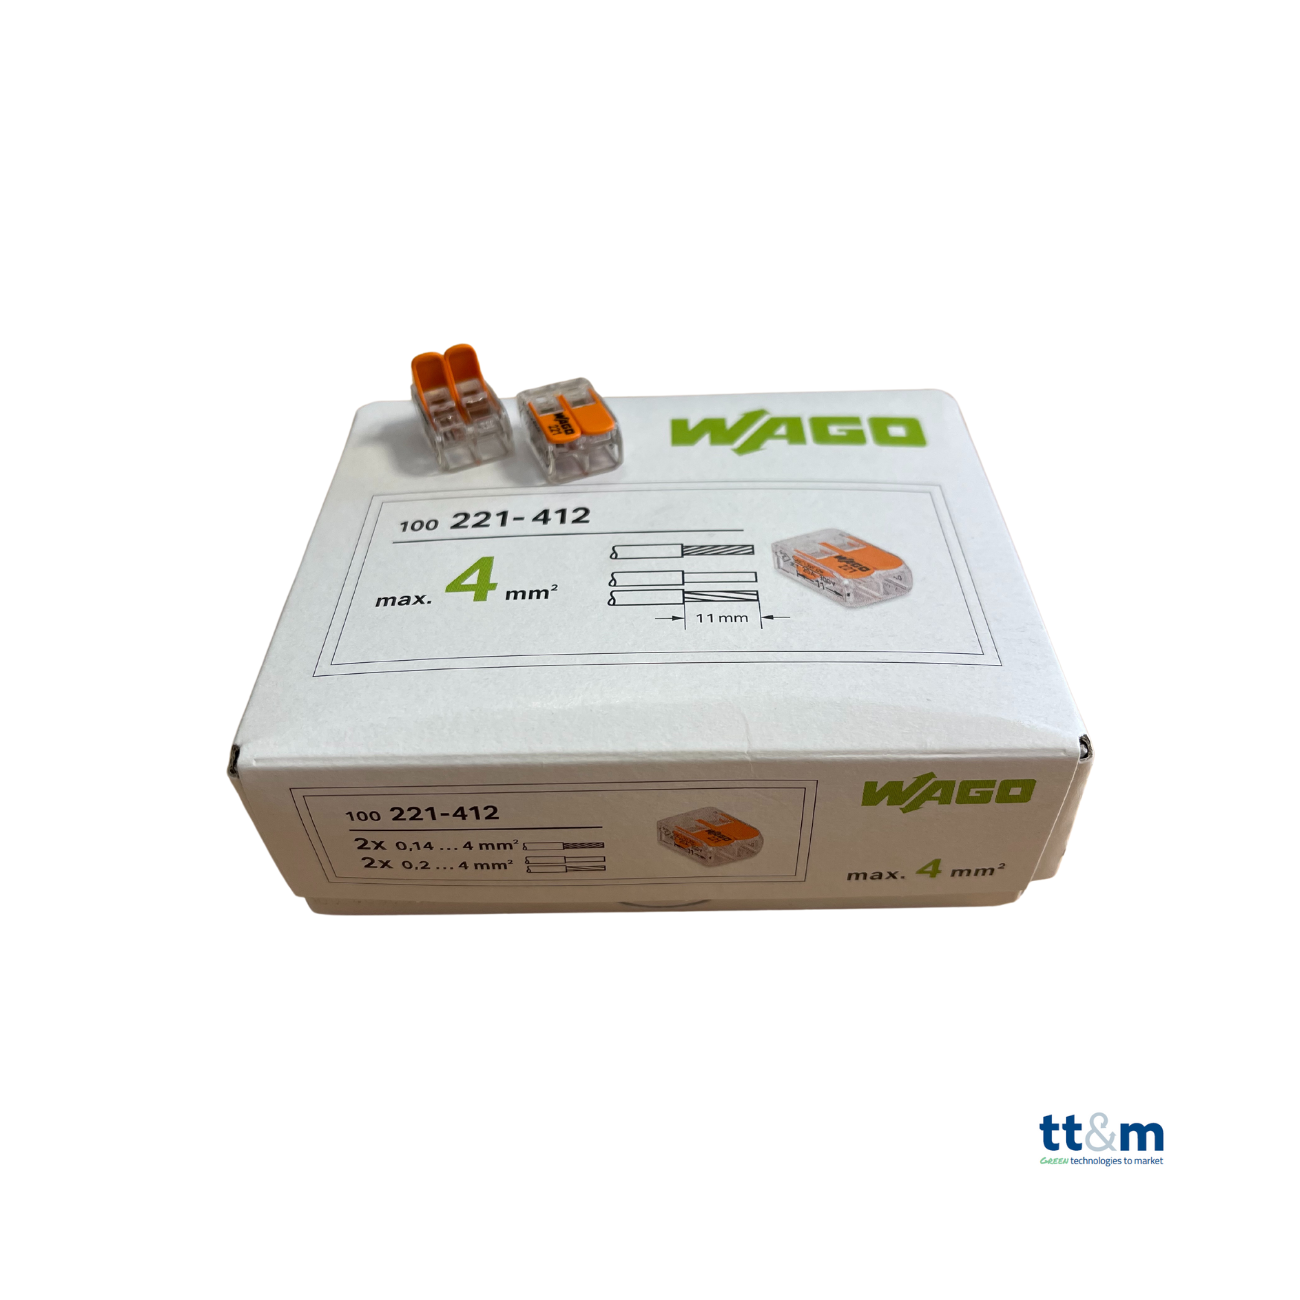 WAGO COMPACT-Verbindungsklemme, 2-polig, max. 4 mm², 221-412 (100 Stk.)